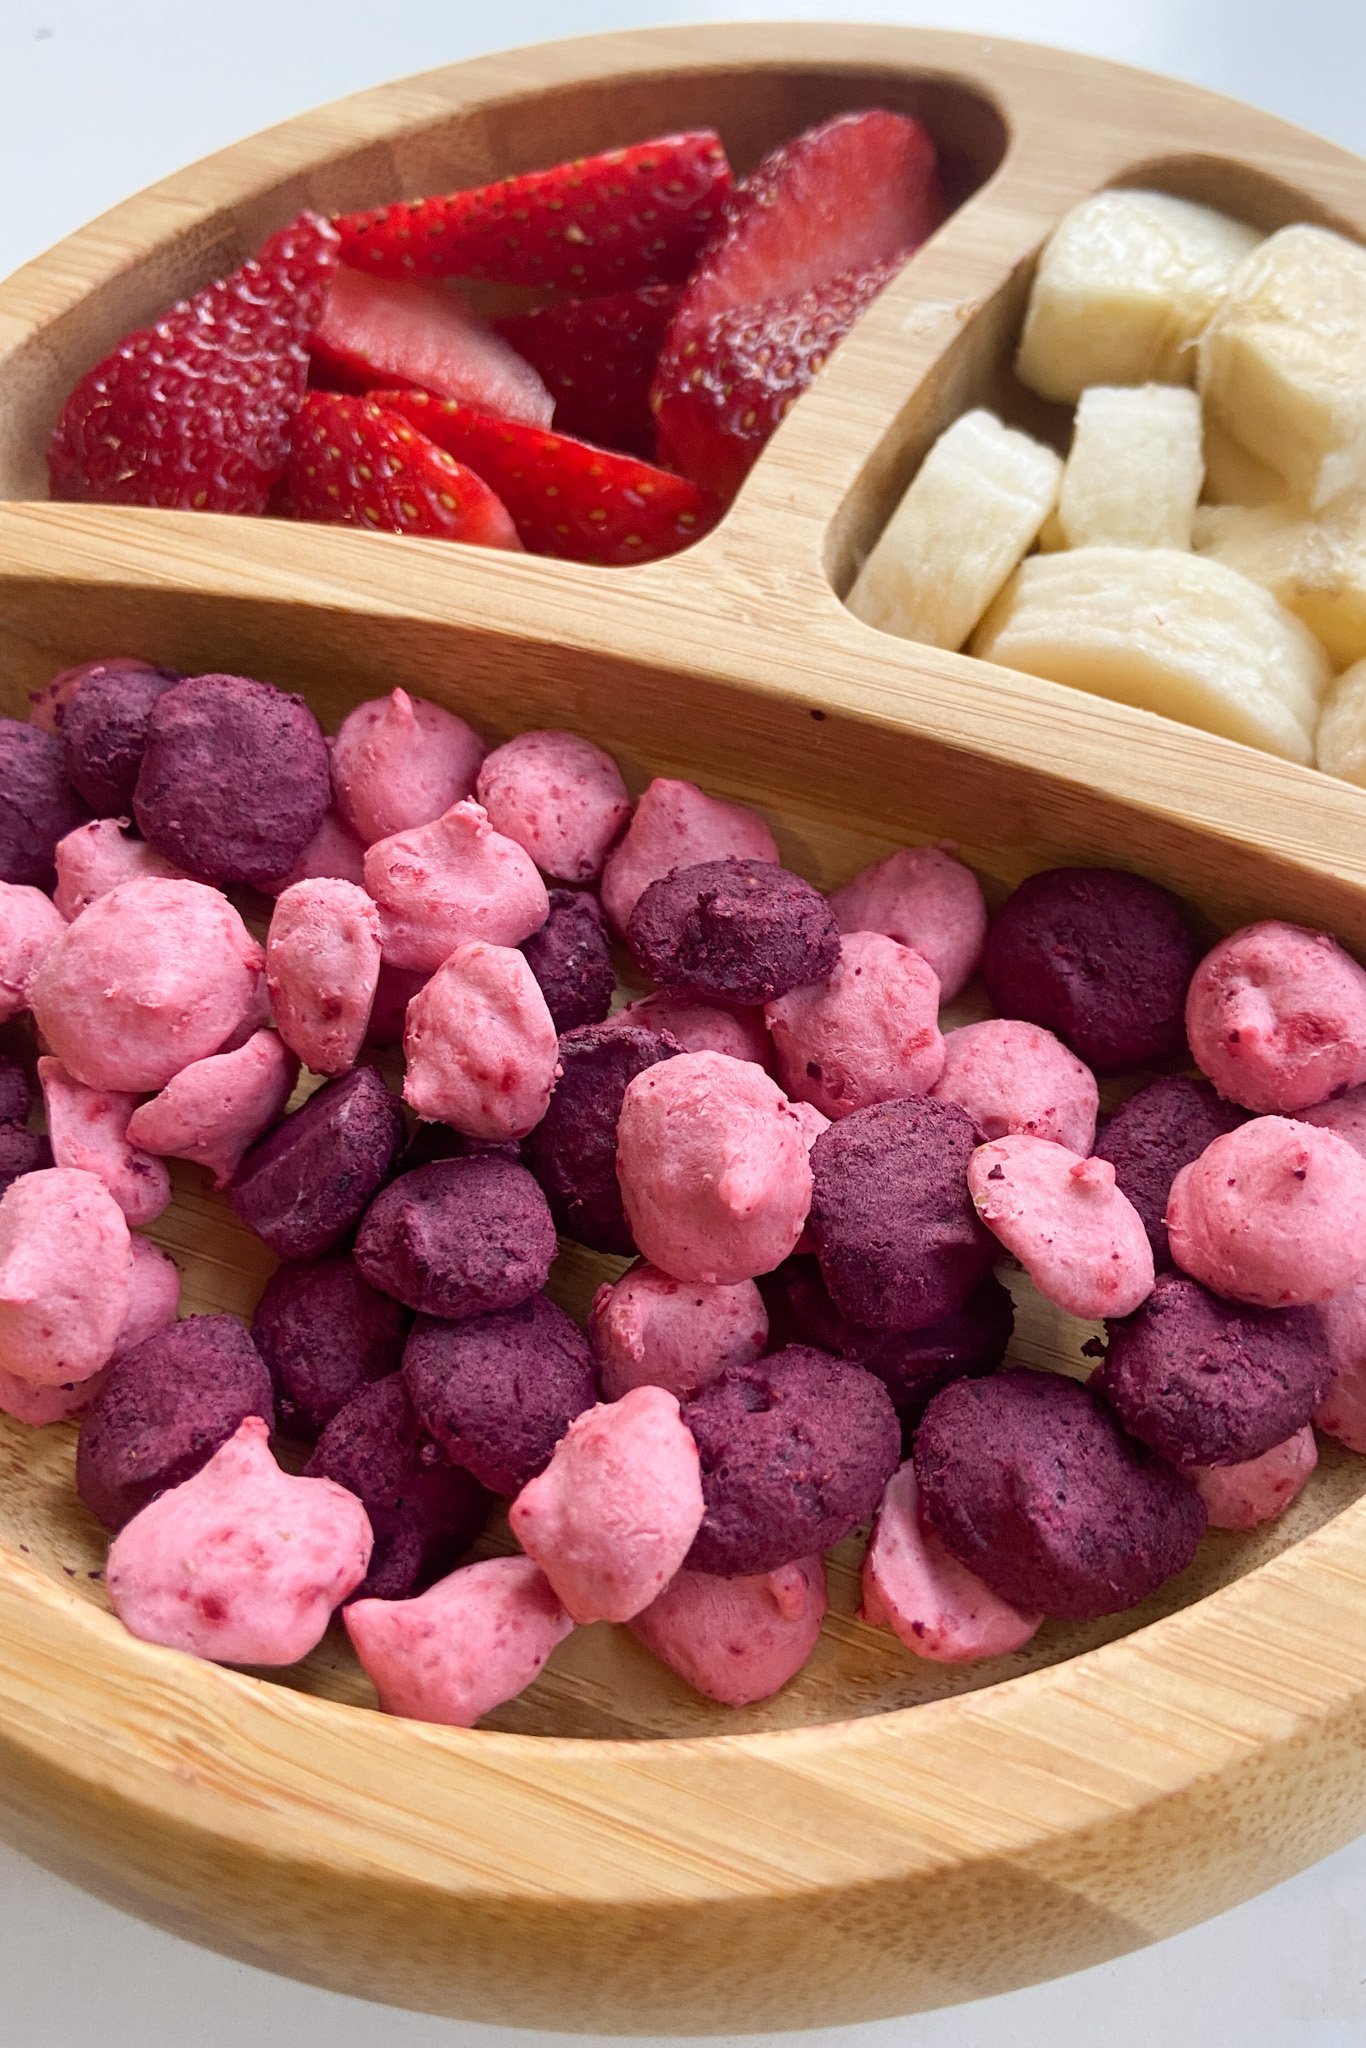 Berry flavored yogurt melts